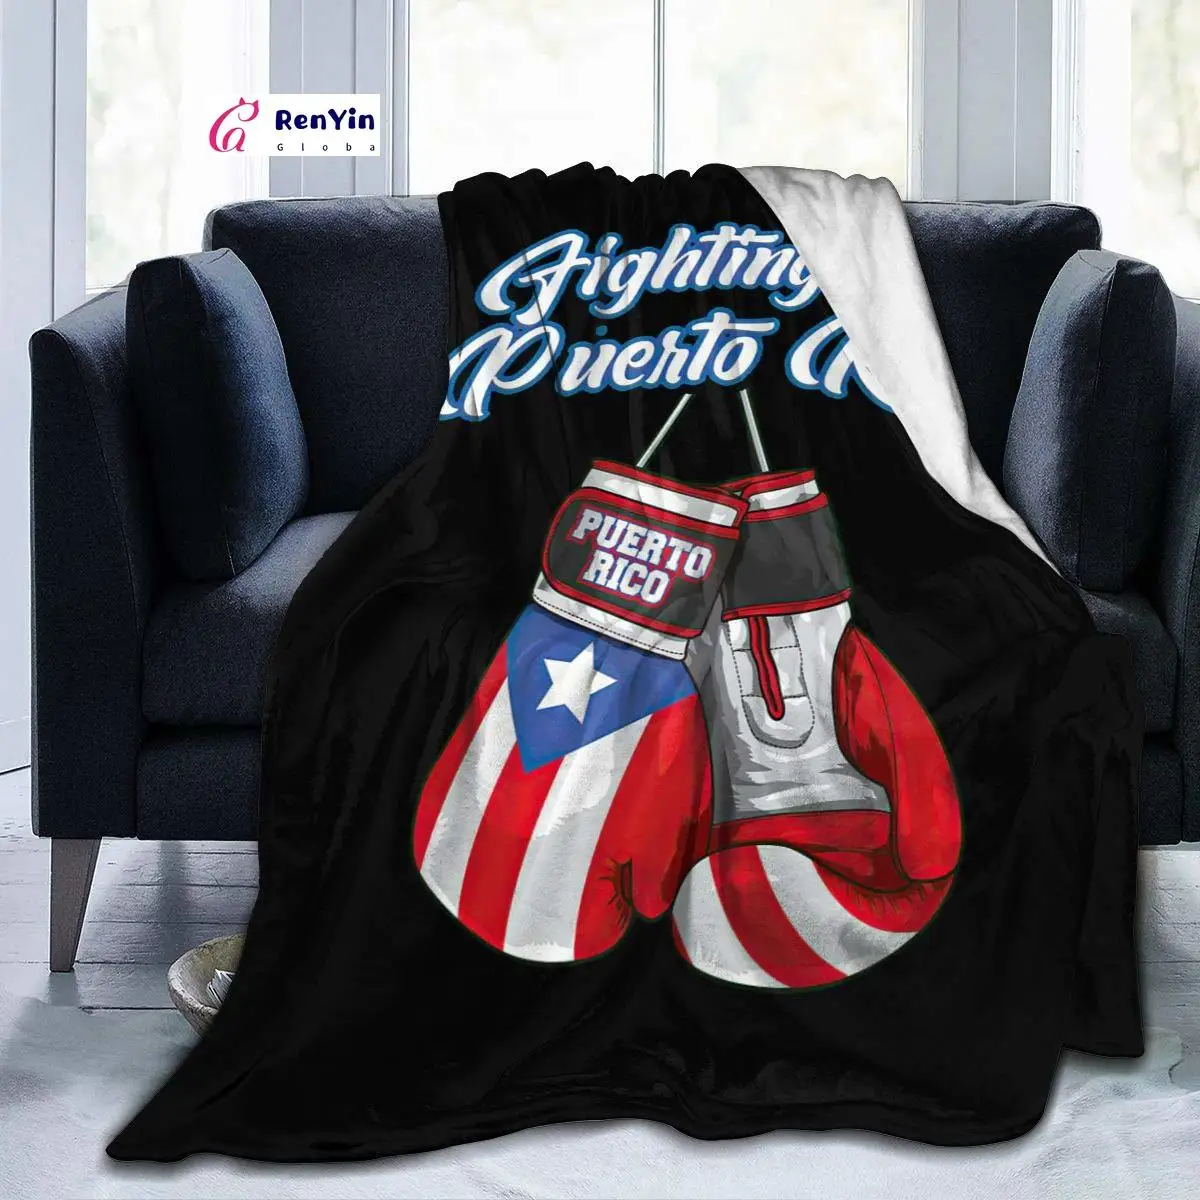 Fighting for Puerto Rico Boxing Gloves Blanket 3D Print Throw Blanket Warm Super Soft Cozy Lunch Break Blanket for